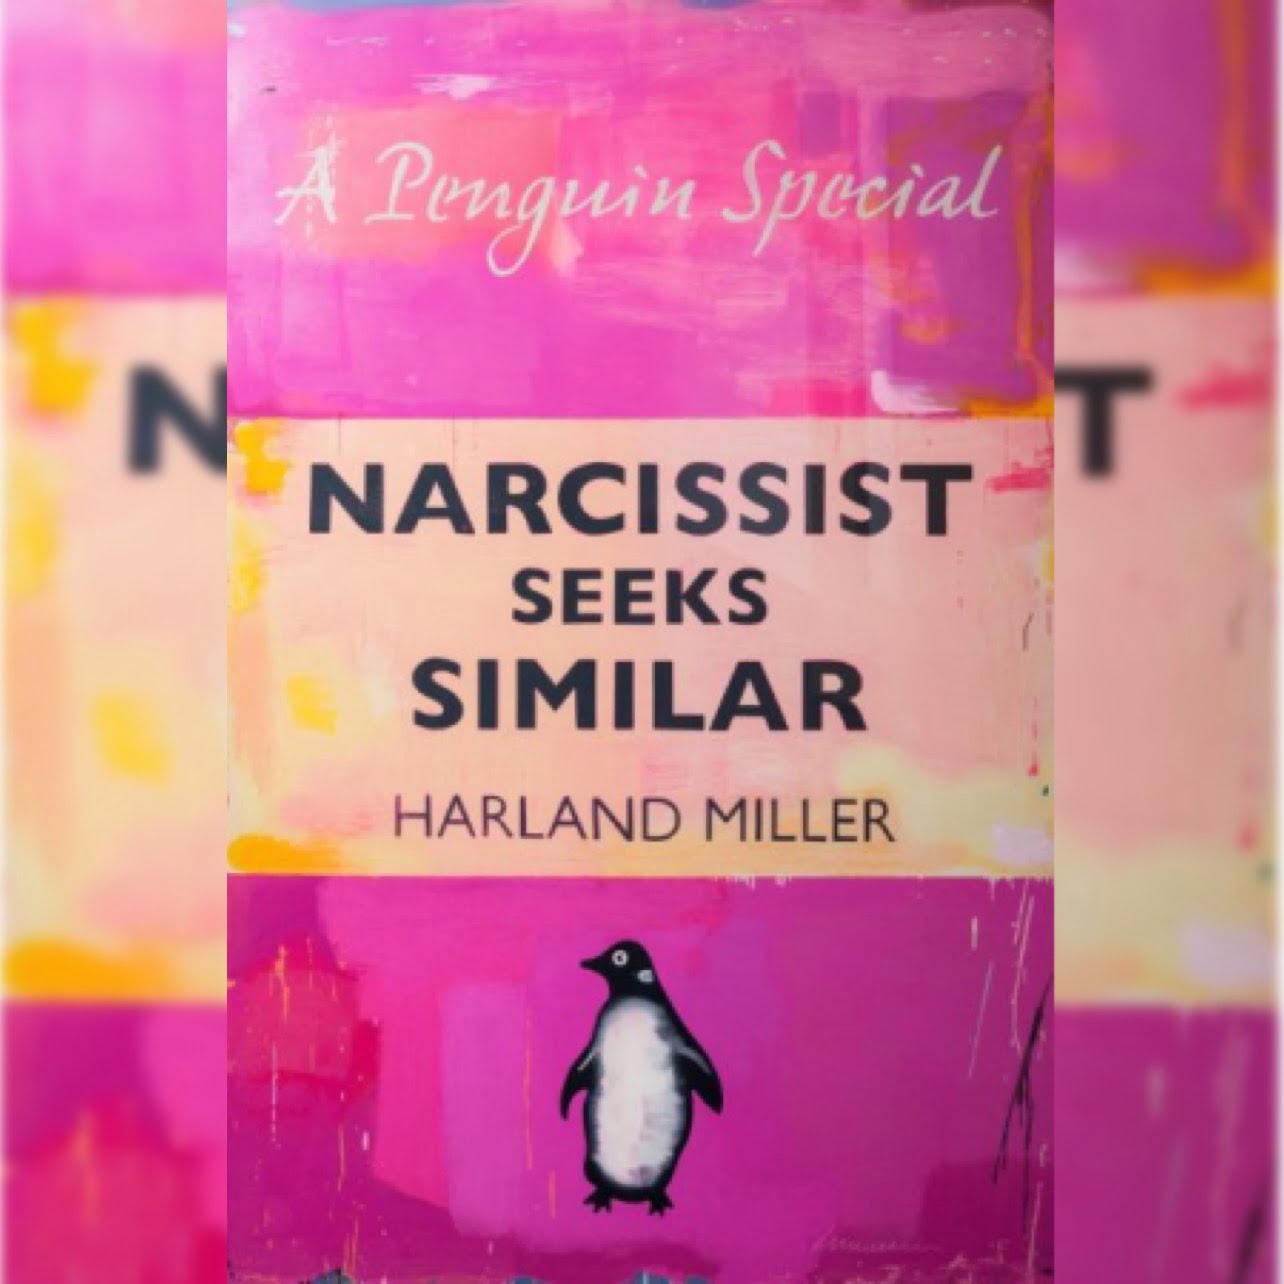 Narcissist Seeks Similar by Harland Miller VIA 360 MAGAZINE.